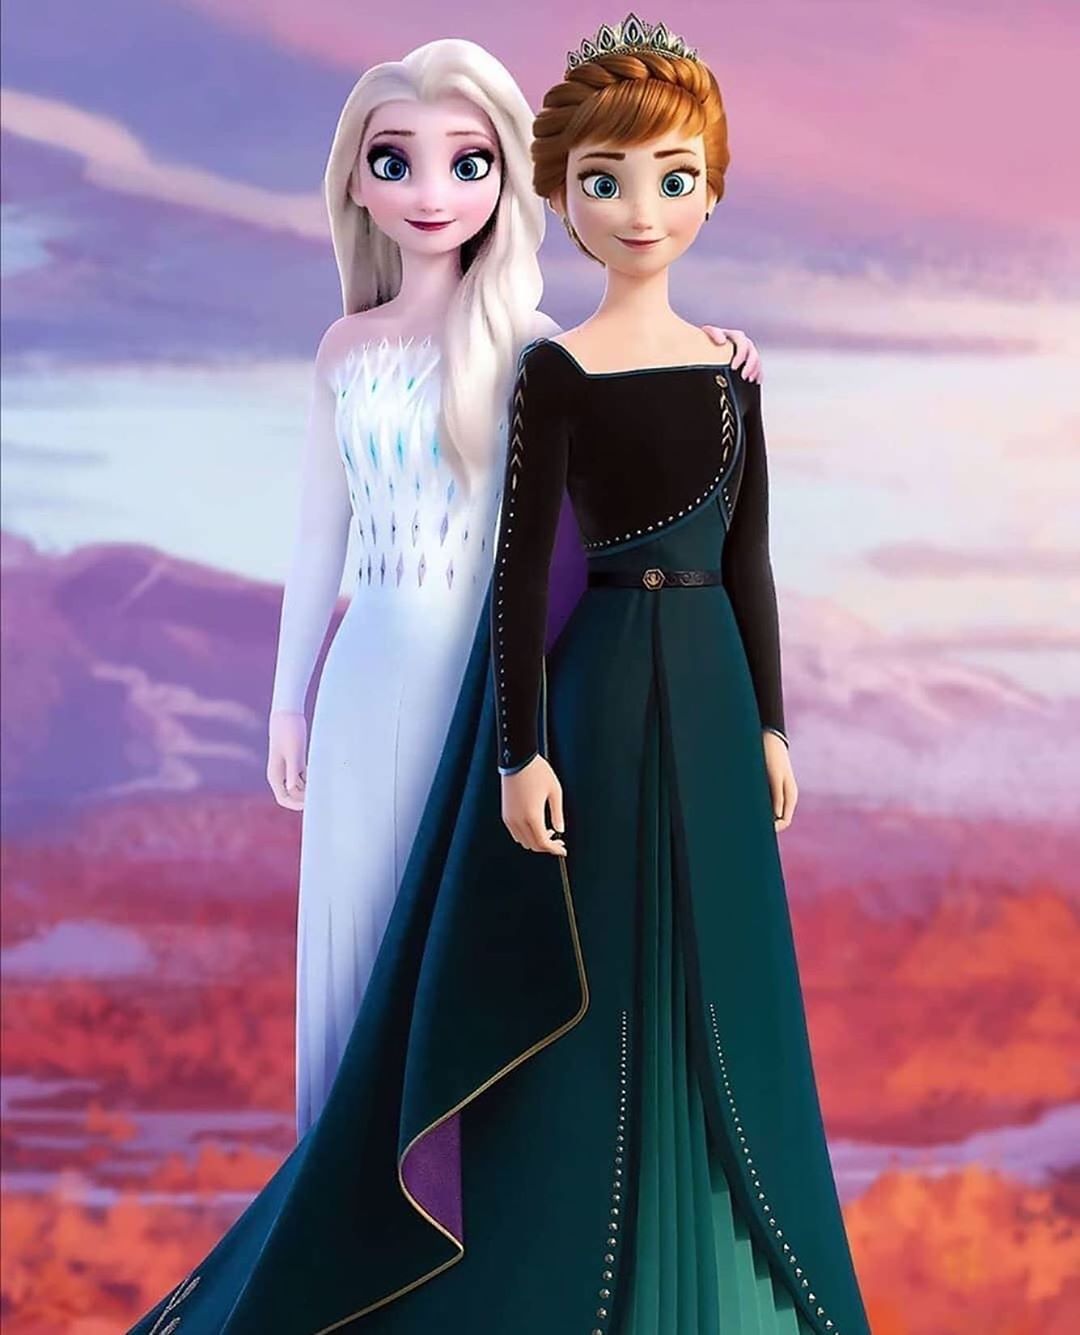 Vouge Fan Account on Instagram: “Elsa & Anna